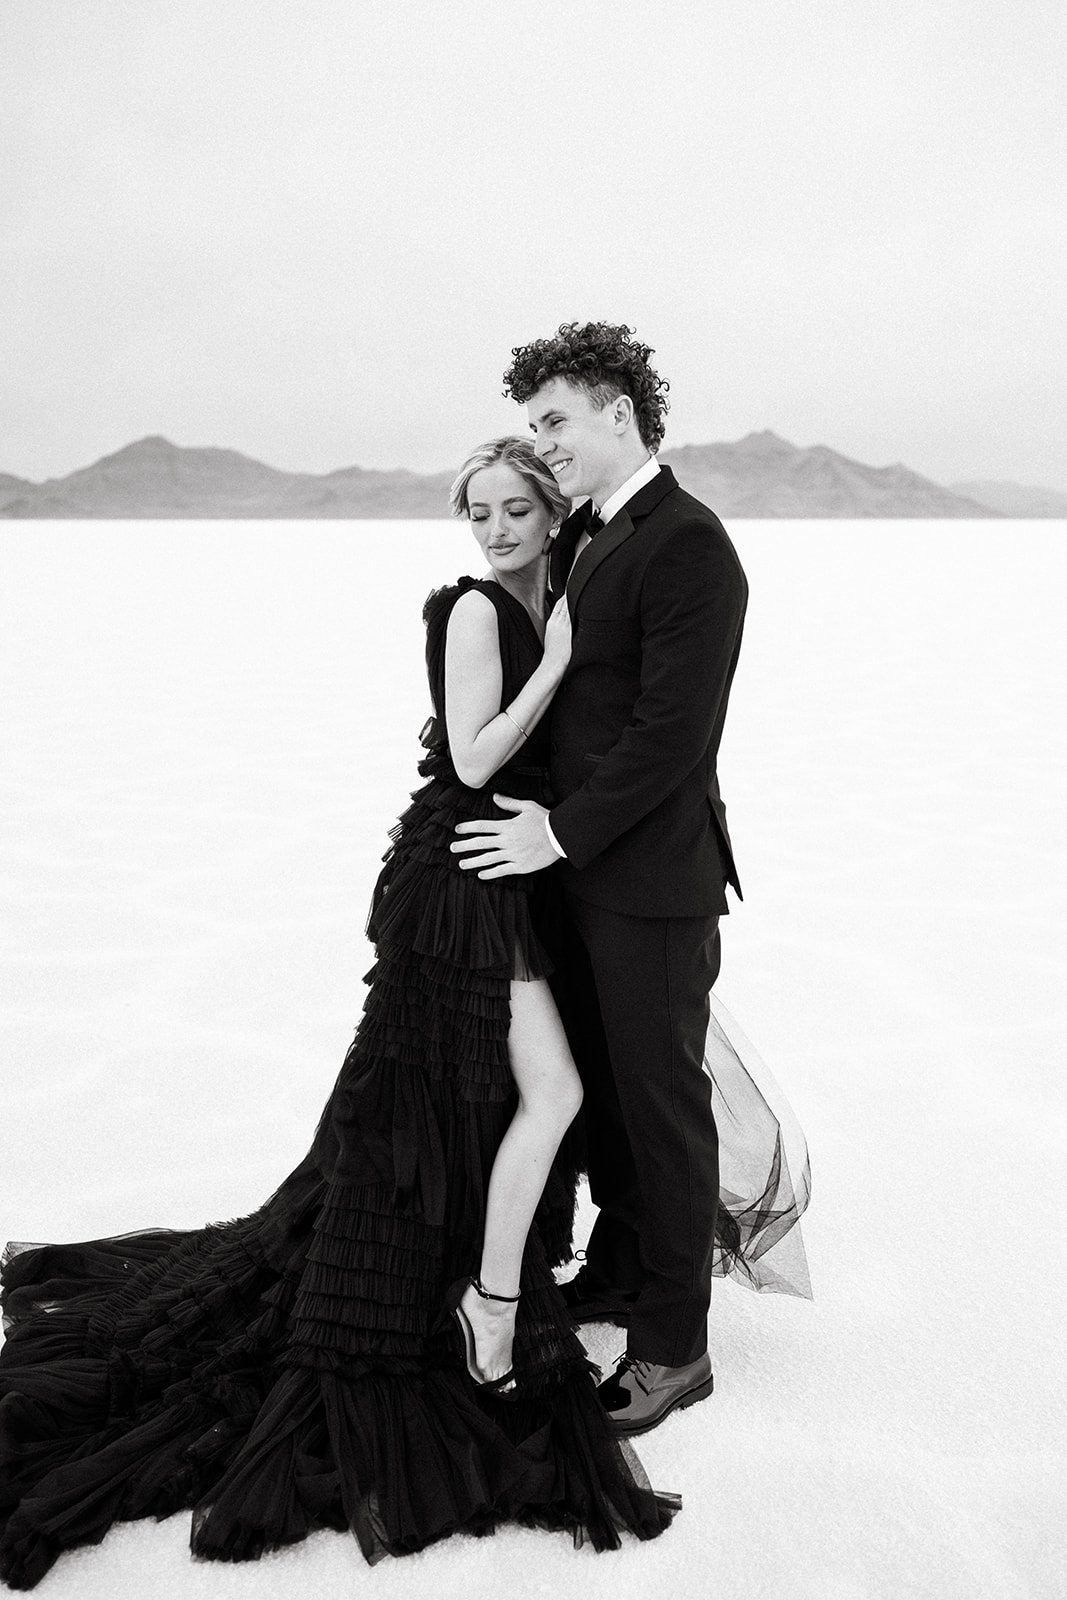 Black tulle dress swirls around bride at Utah Salt Flats’ photography shoot